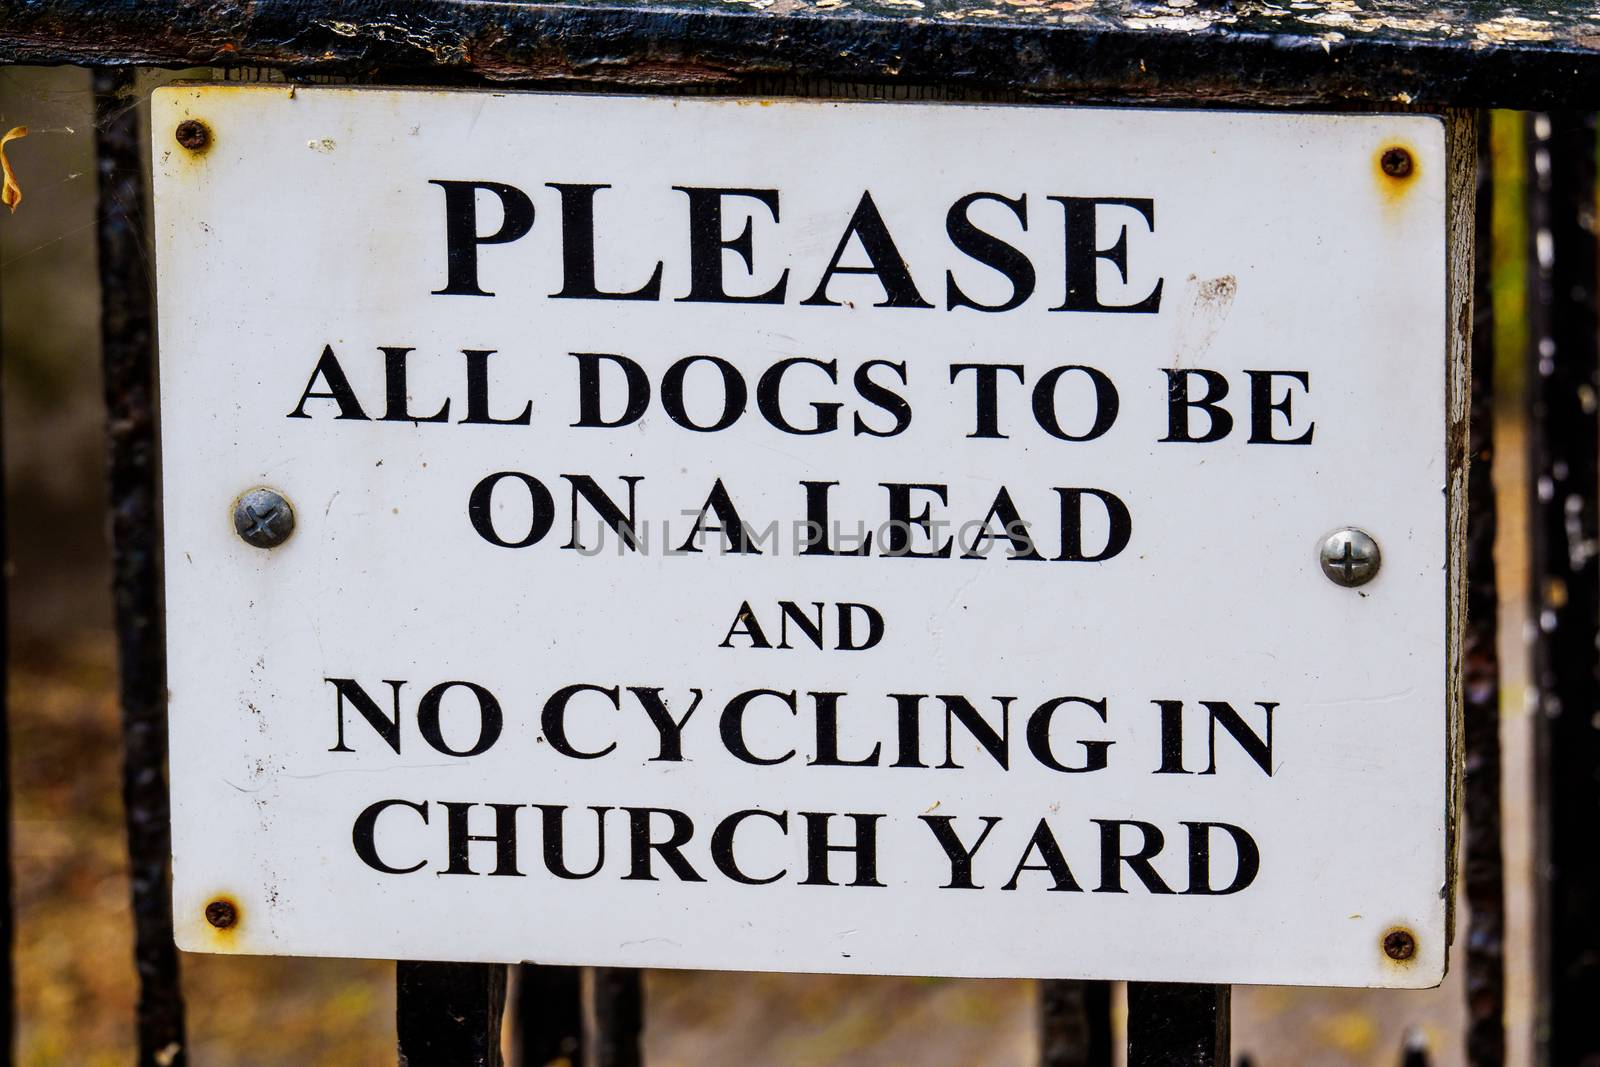 Keep all dogs on lead sign on churchyard by paddythegolfer